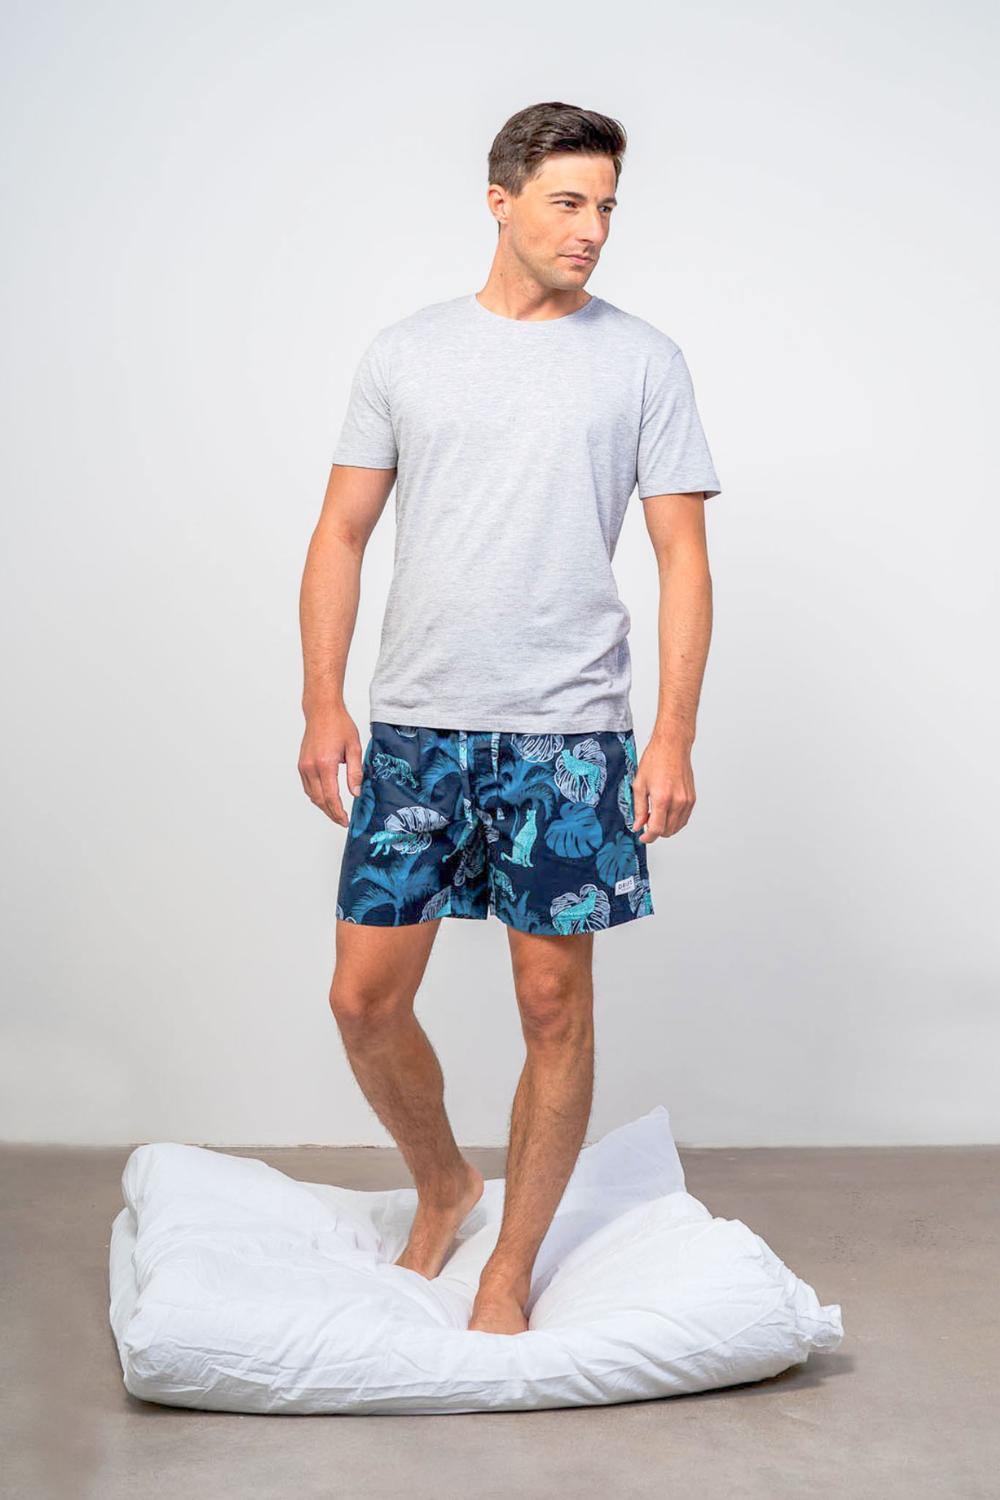 Drift Sleepwear model wearing tropical printed pyjama shorts